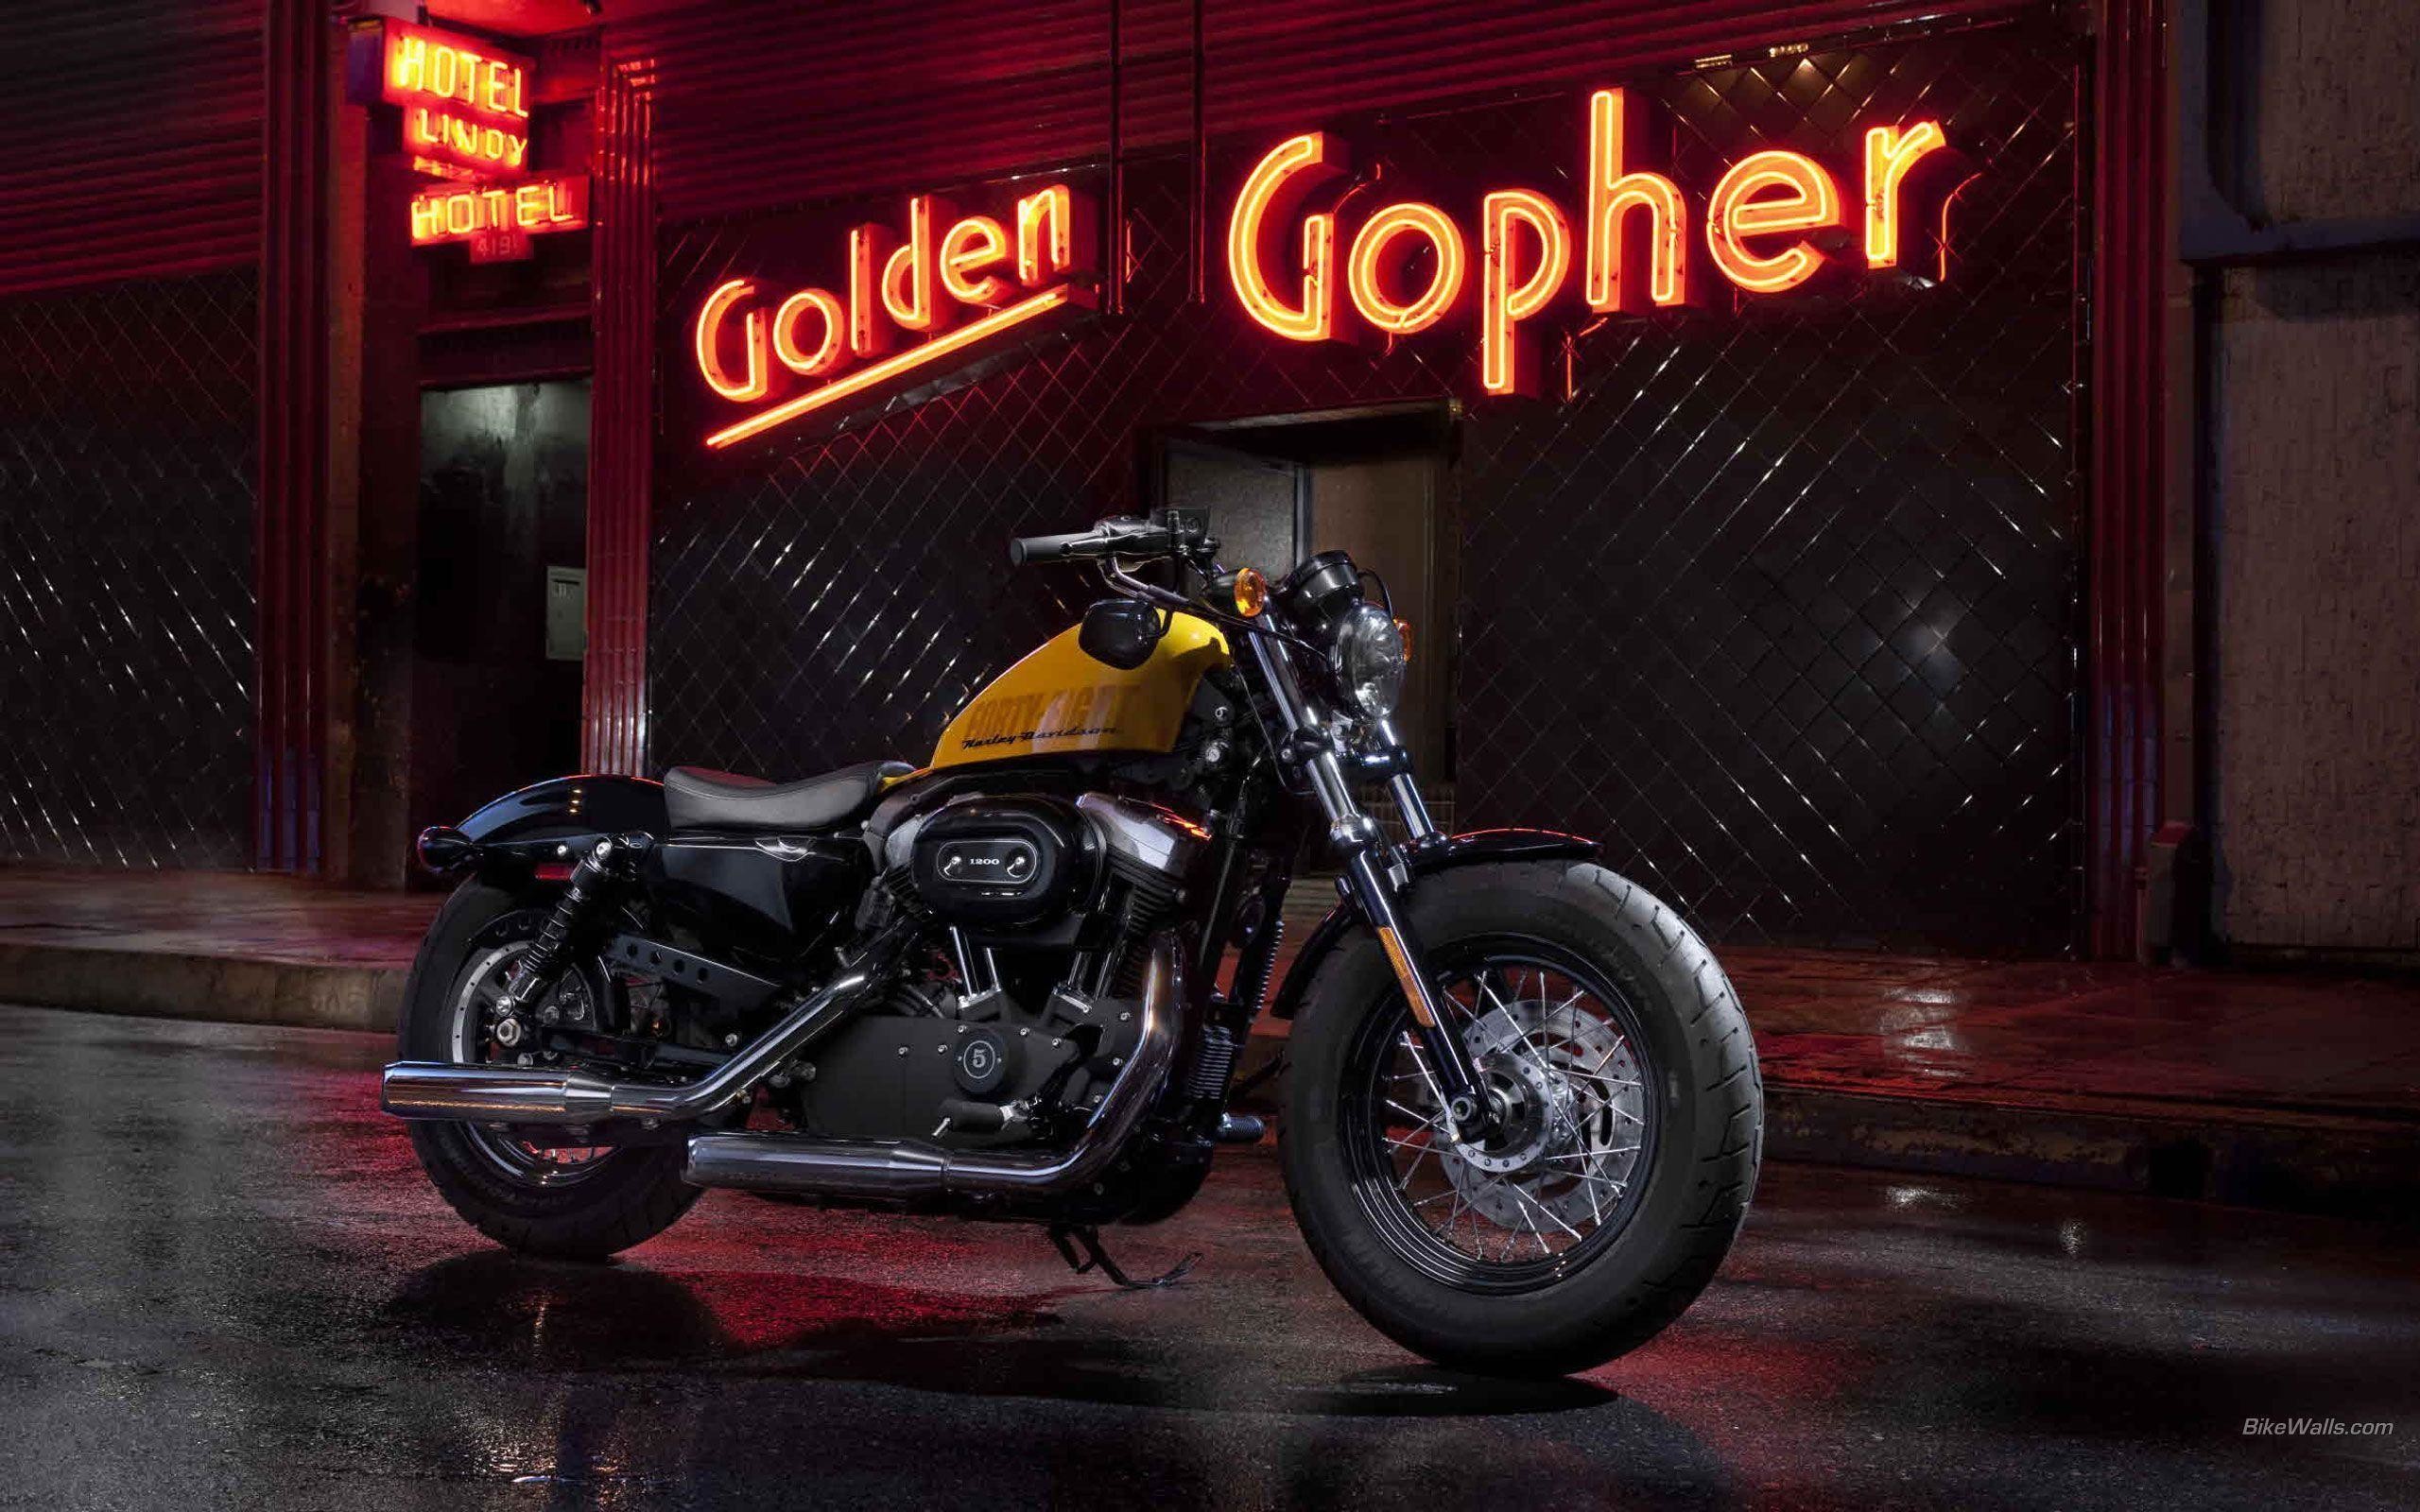 2560x1600 Harley Davidson Sportster 2560 X 1600 362 Kb Jpeg | Top Harley .